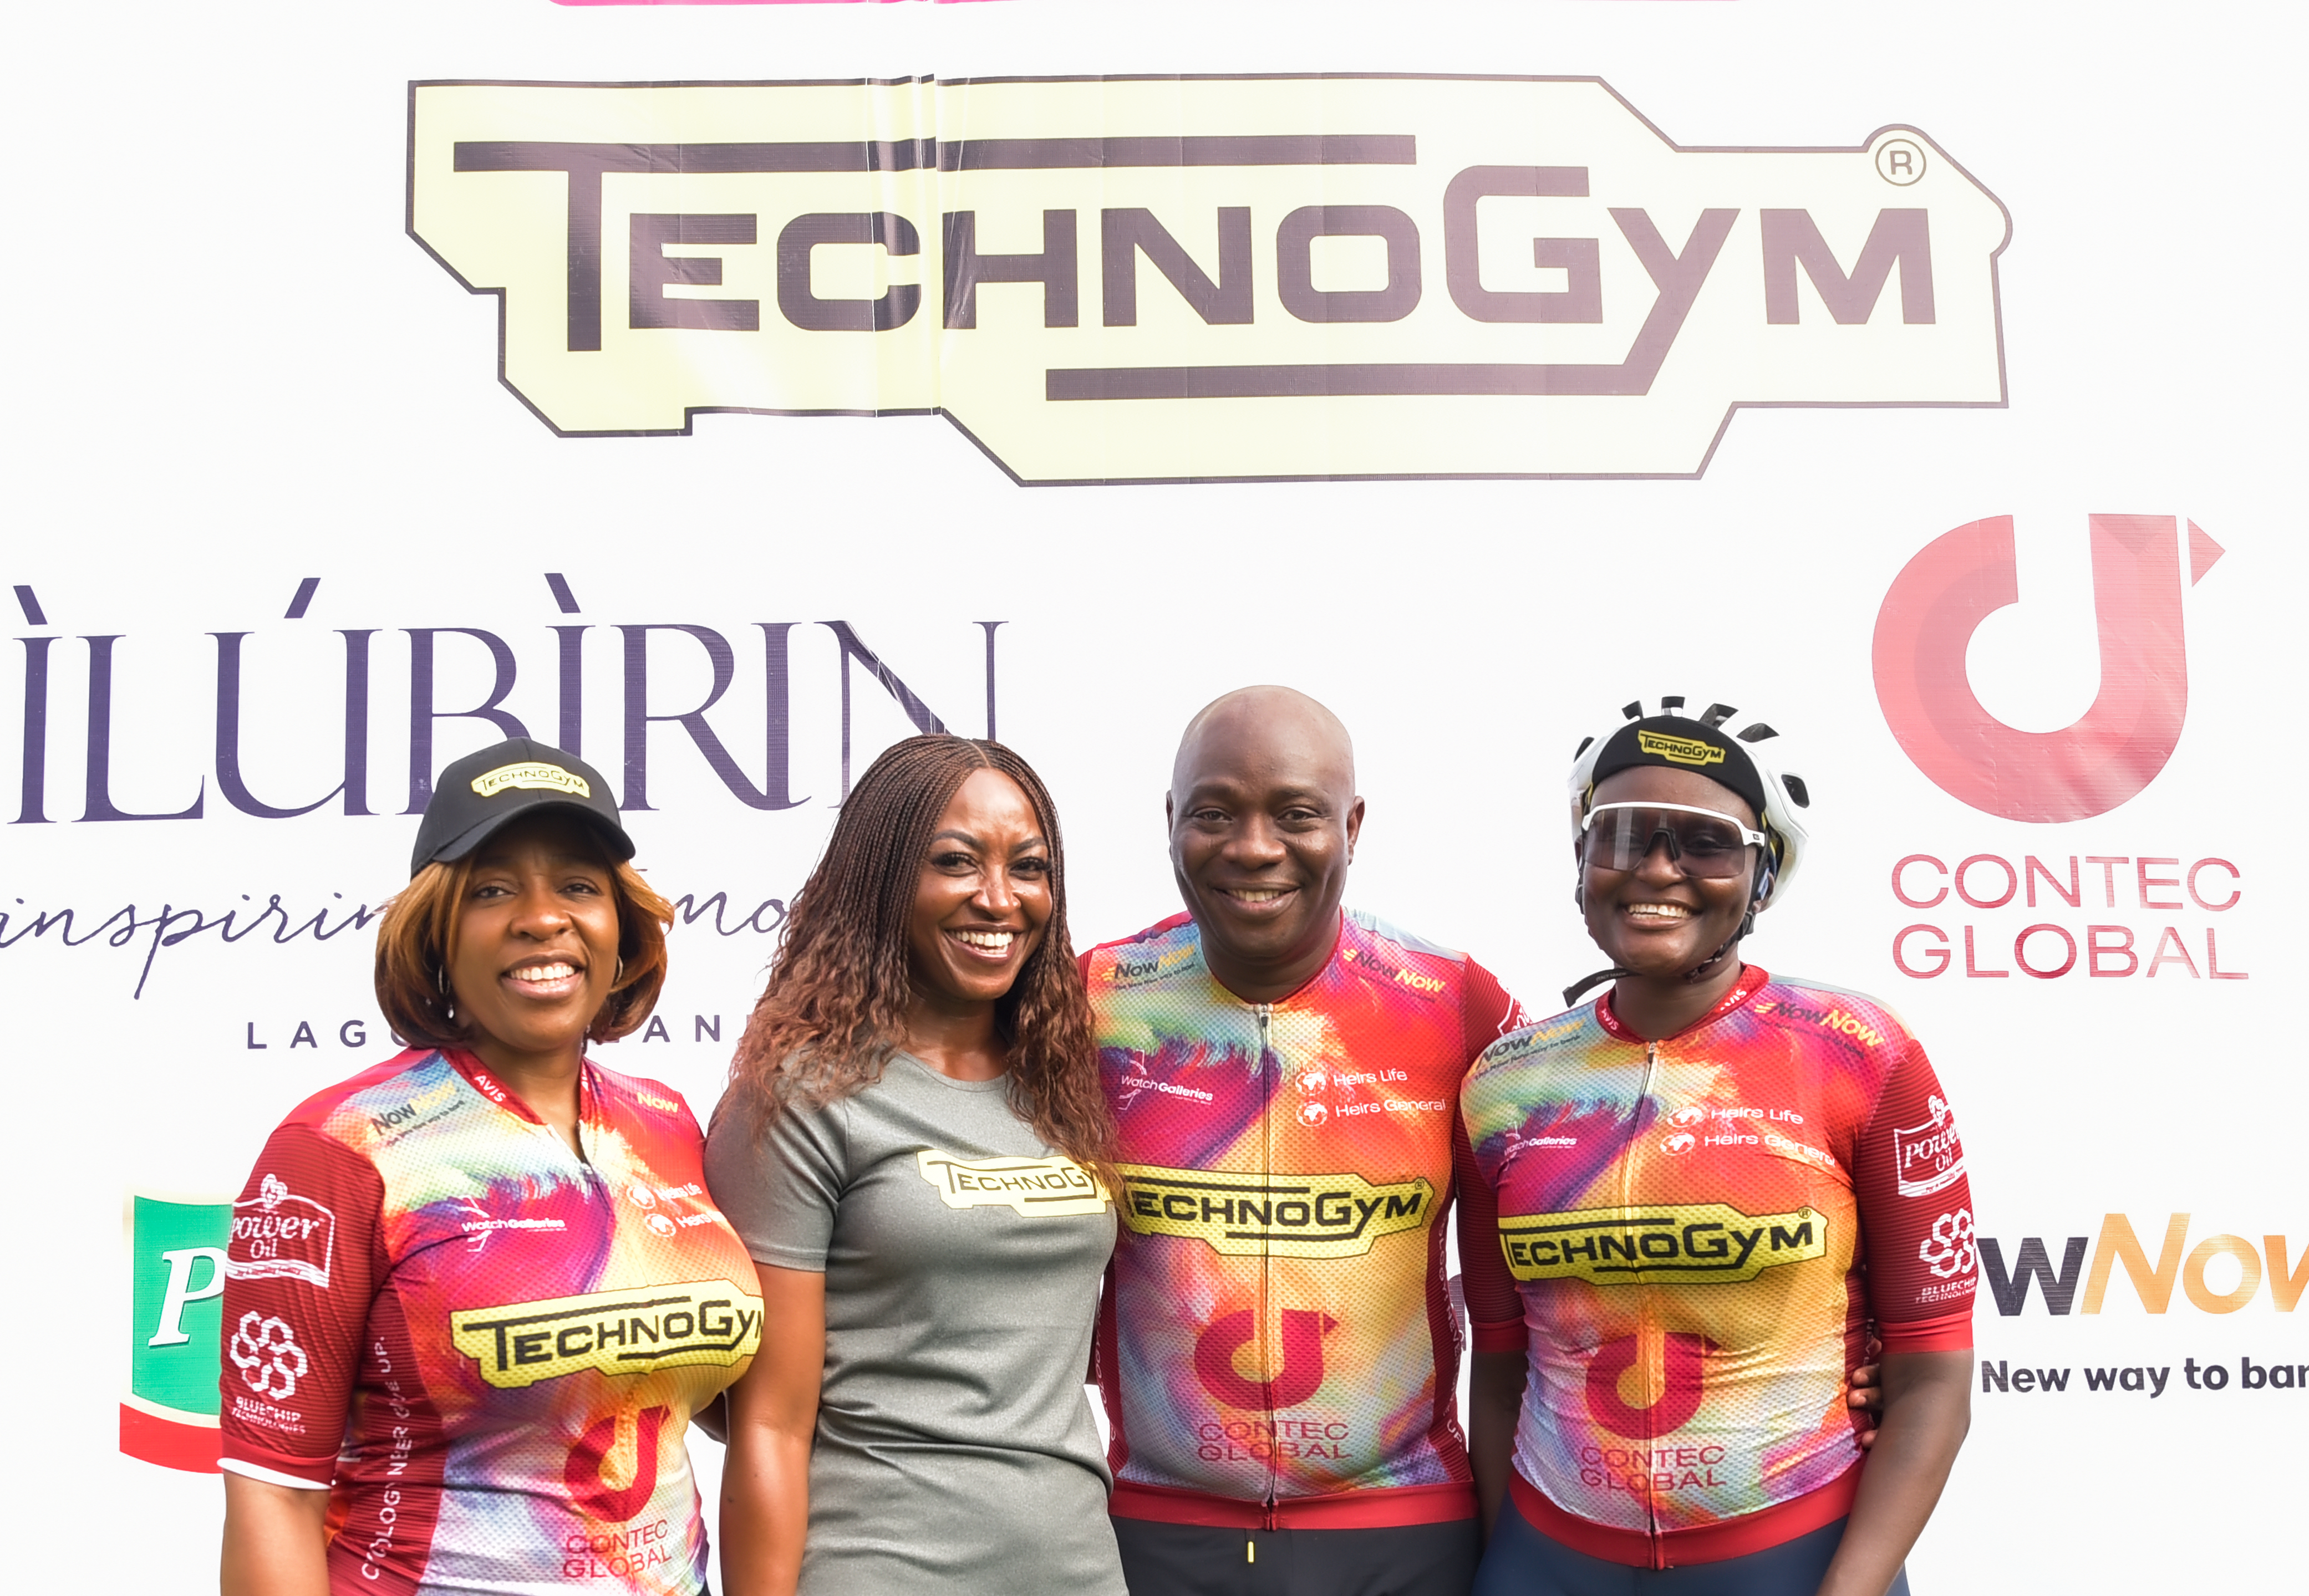 Technogym the Headline Sponsor of Cycology Cycling club|Fab.ng